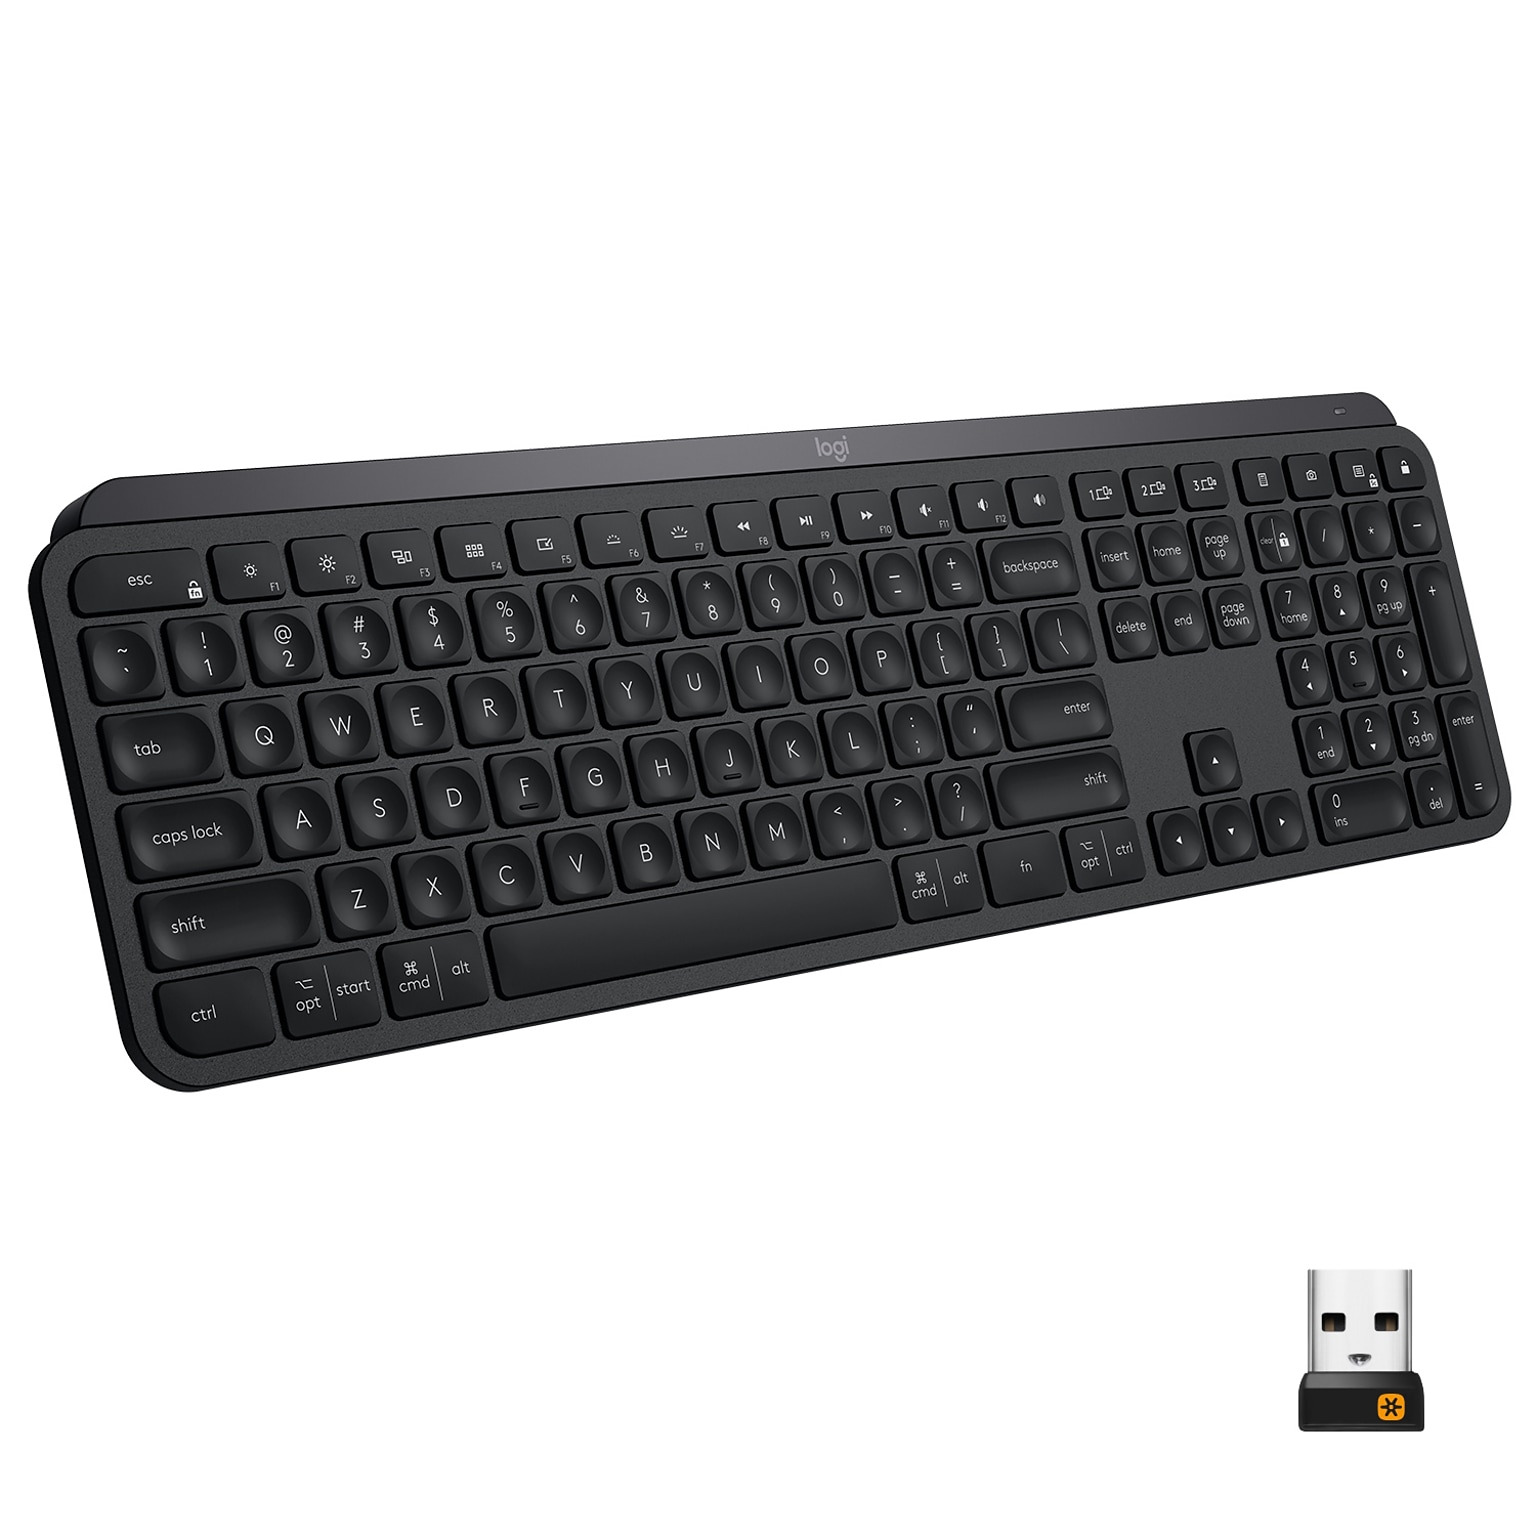 Logitech MX Wireless Keyboard, Black | Quill.com